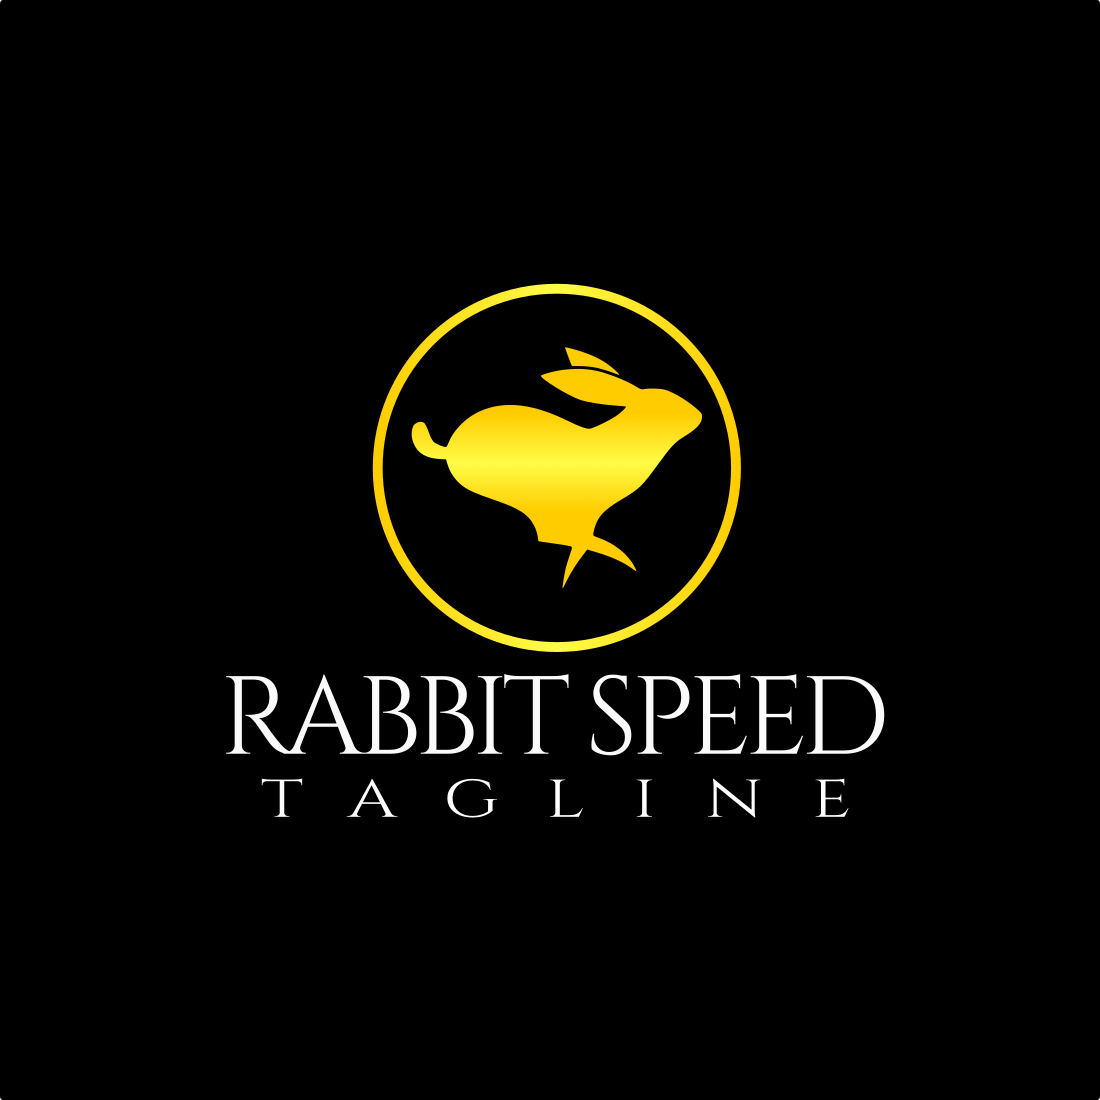 Rabbit Speed Custom Logo Design previews.